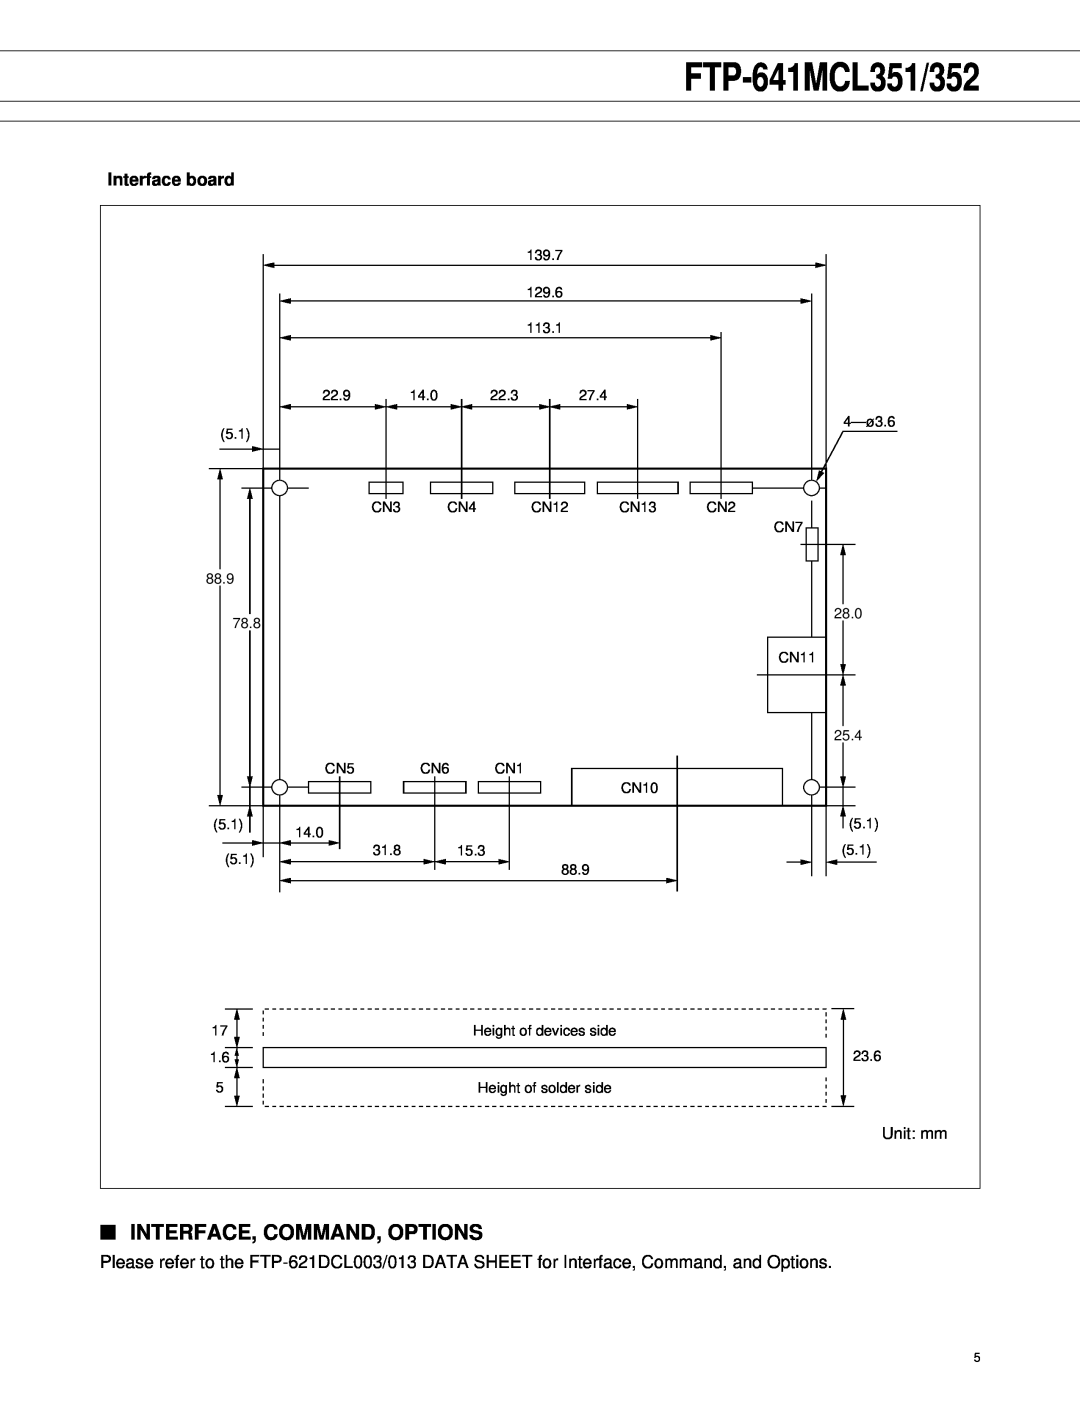 Fujitsu FTP-641MCL352 manual Interface, Command, Options, Interface board, FTP-641MCL351/352 